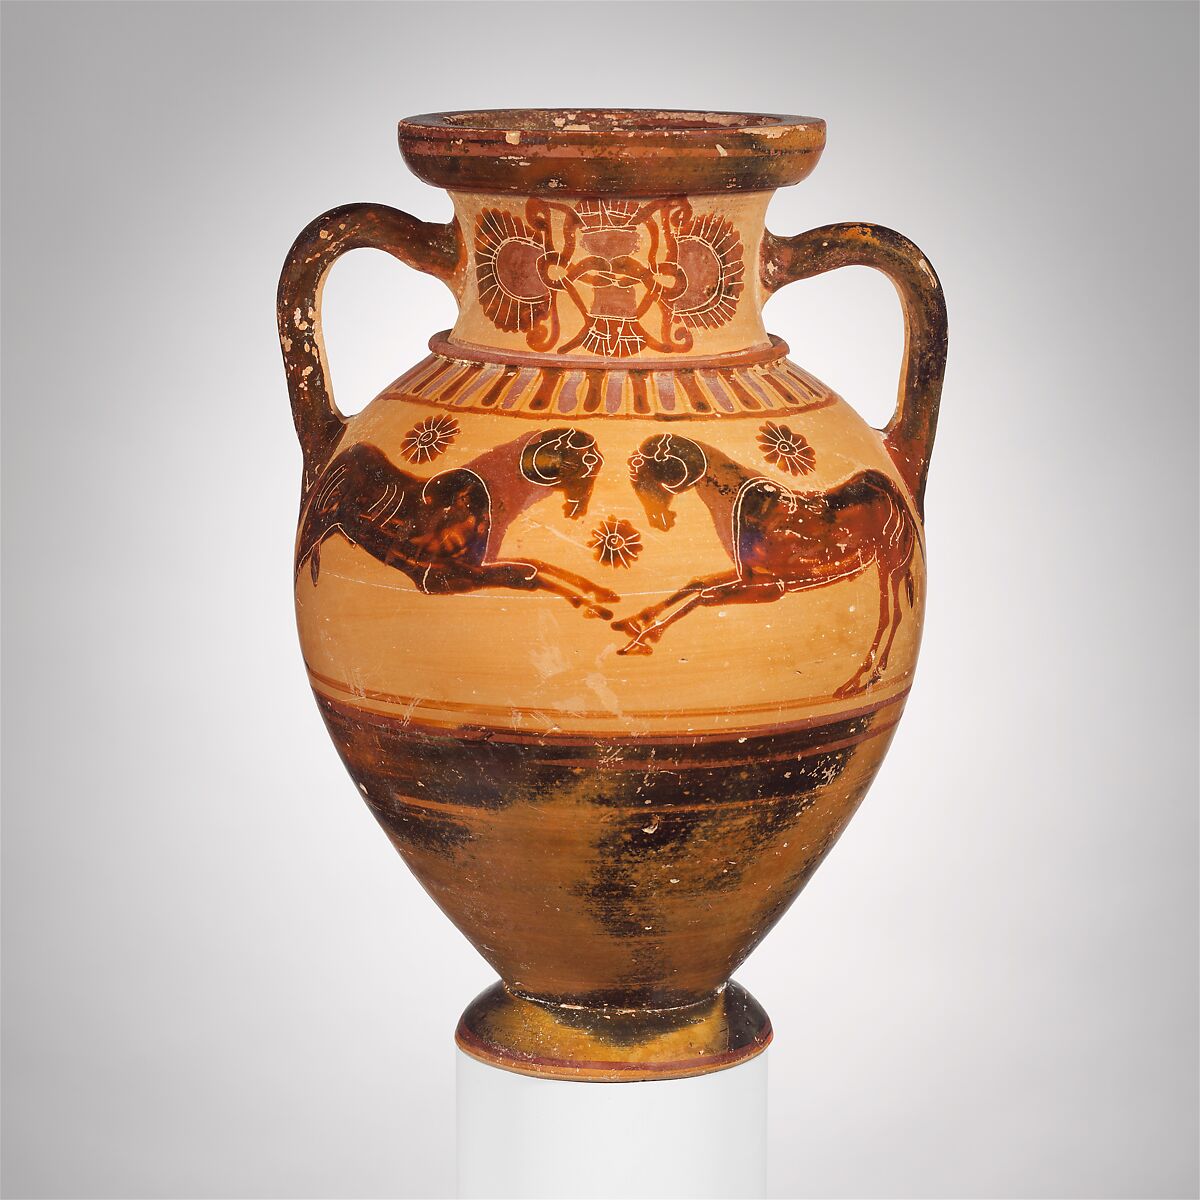 Terracotta neck-amphora (storage jar), Attributed to the Prometheus Painter, Terracotta, Greek, Attic 